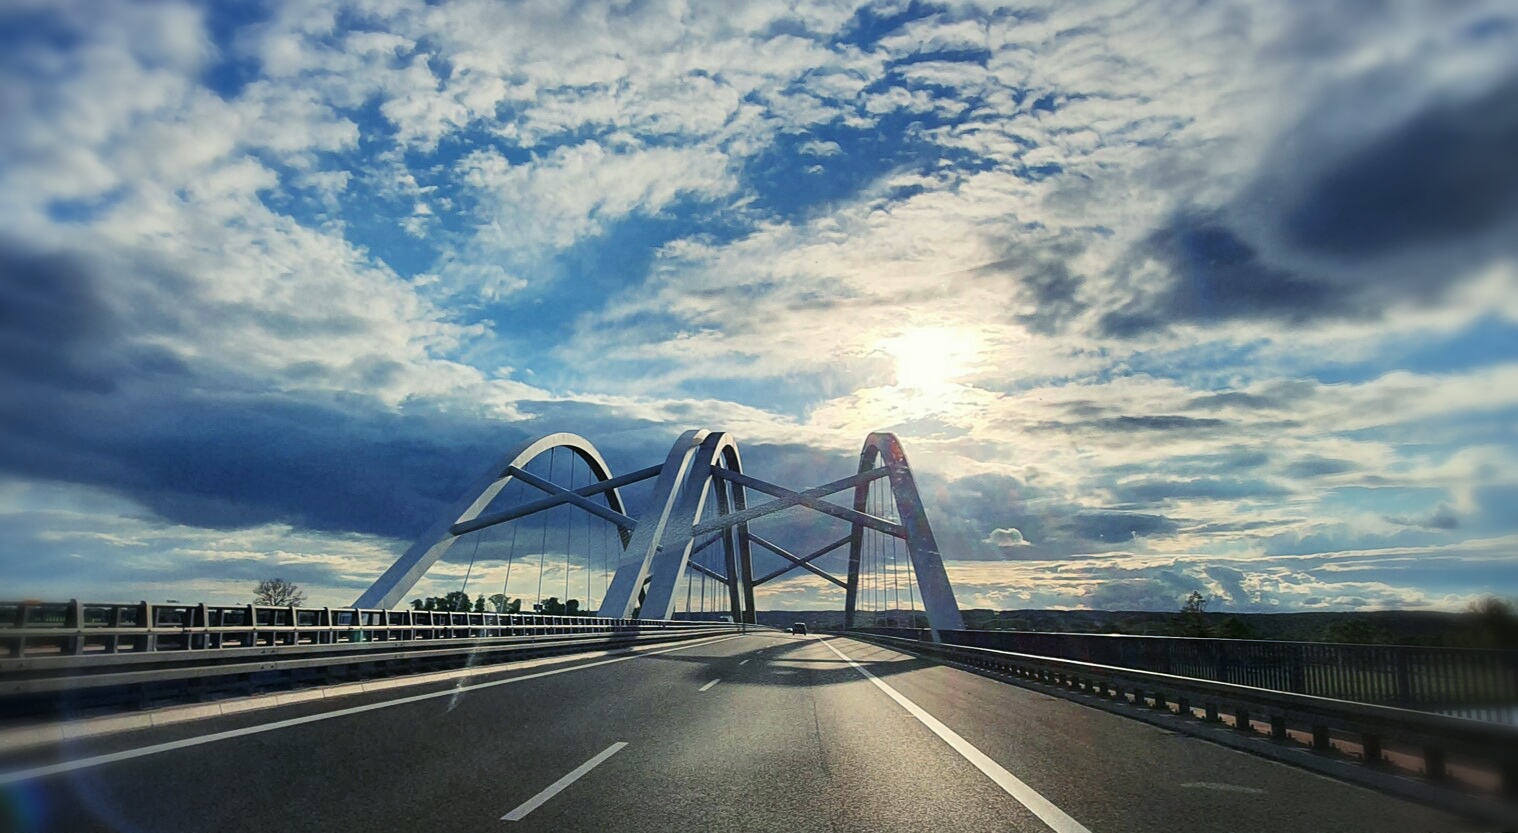 S3 expressway